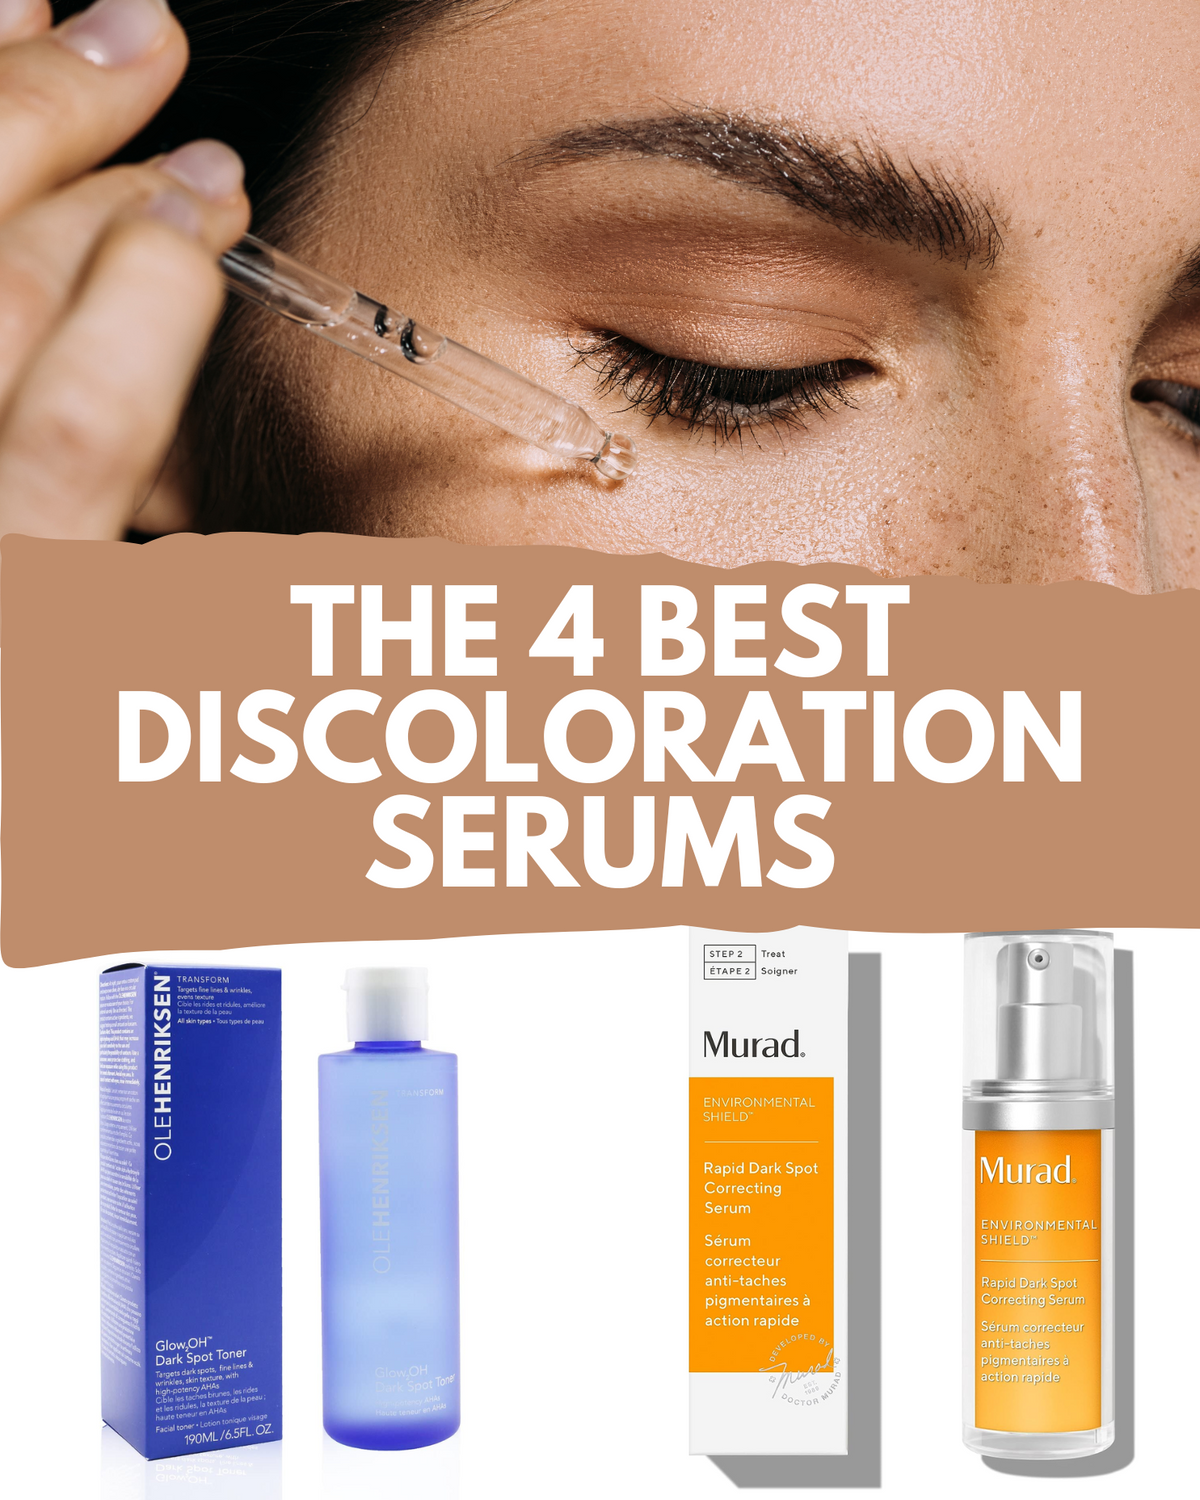 5 Best Face Exfoliators for Sensitive Skin Under $10